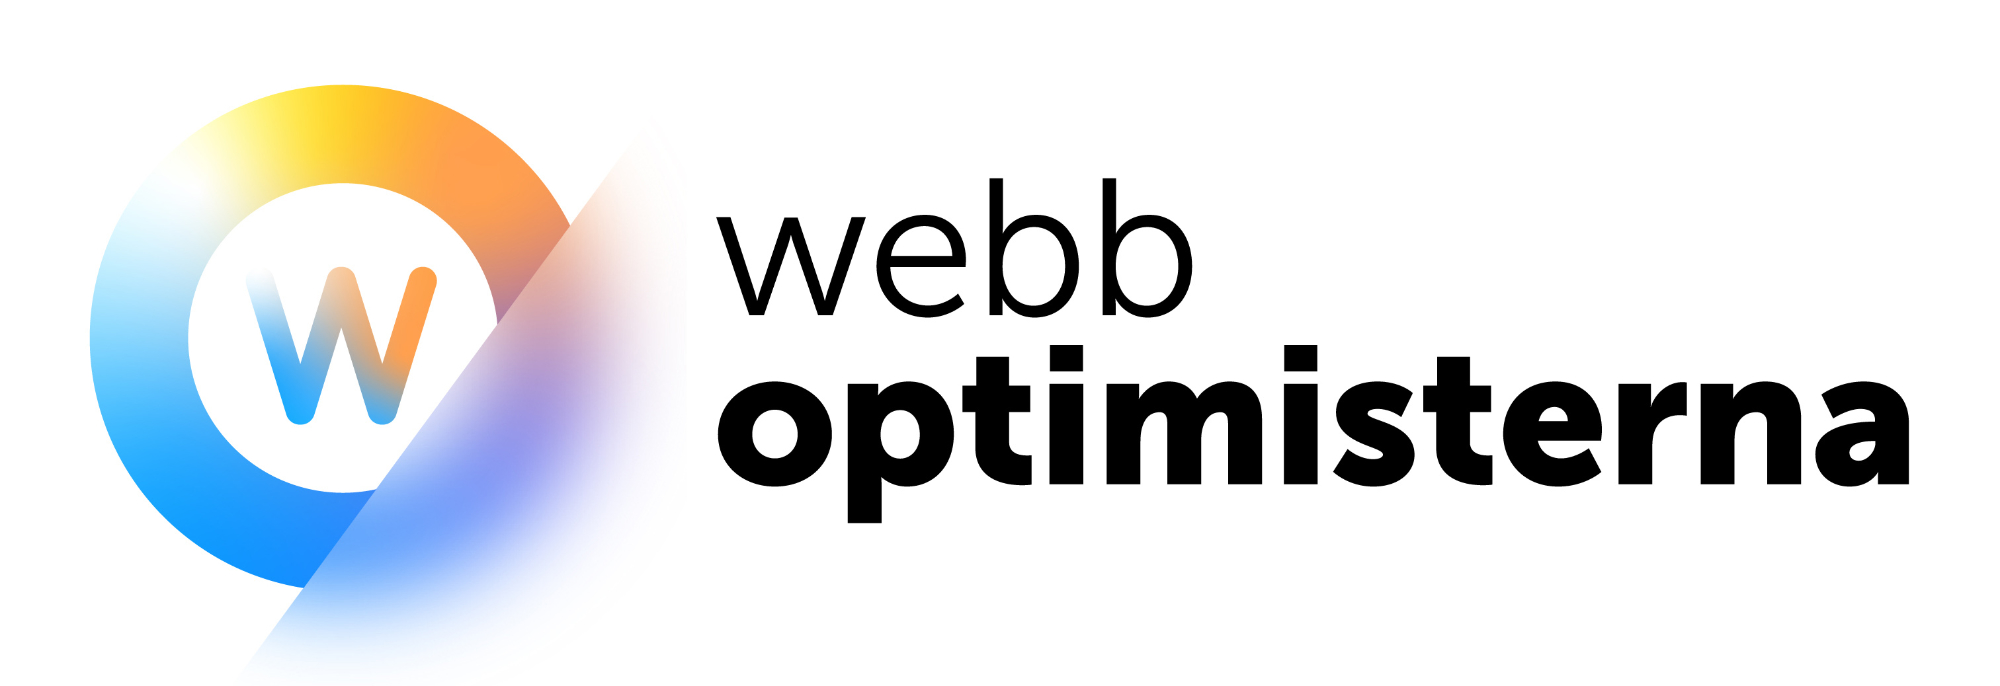 WO webb optimisterna